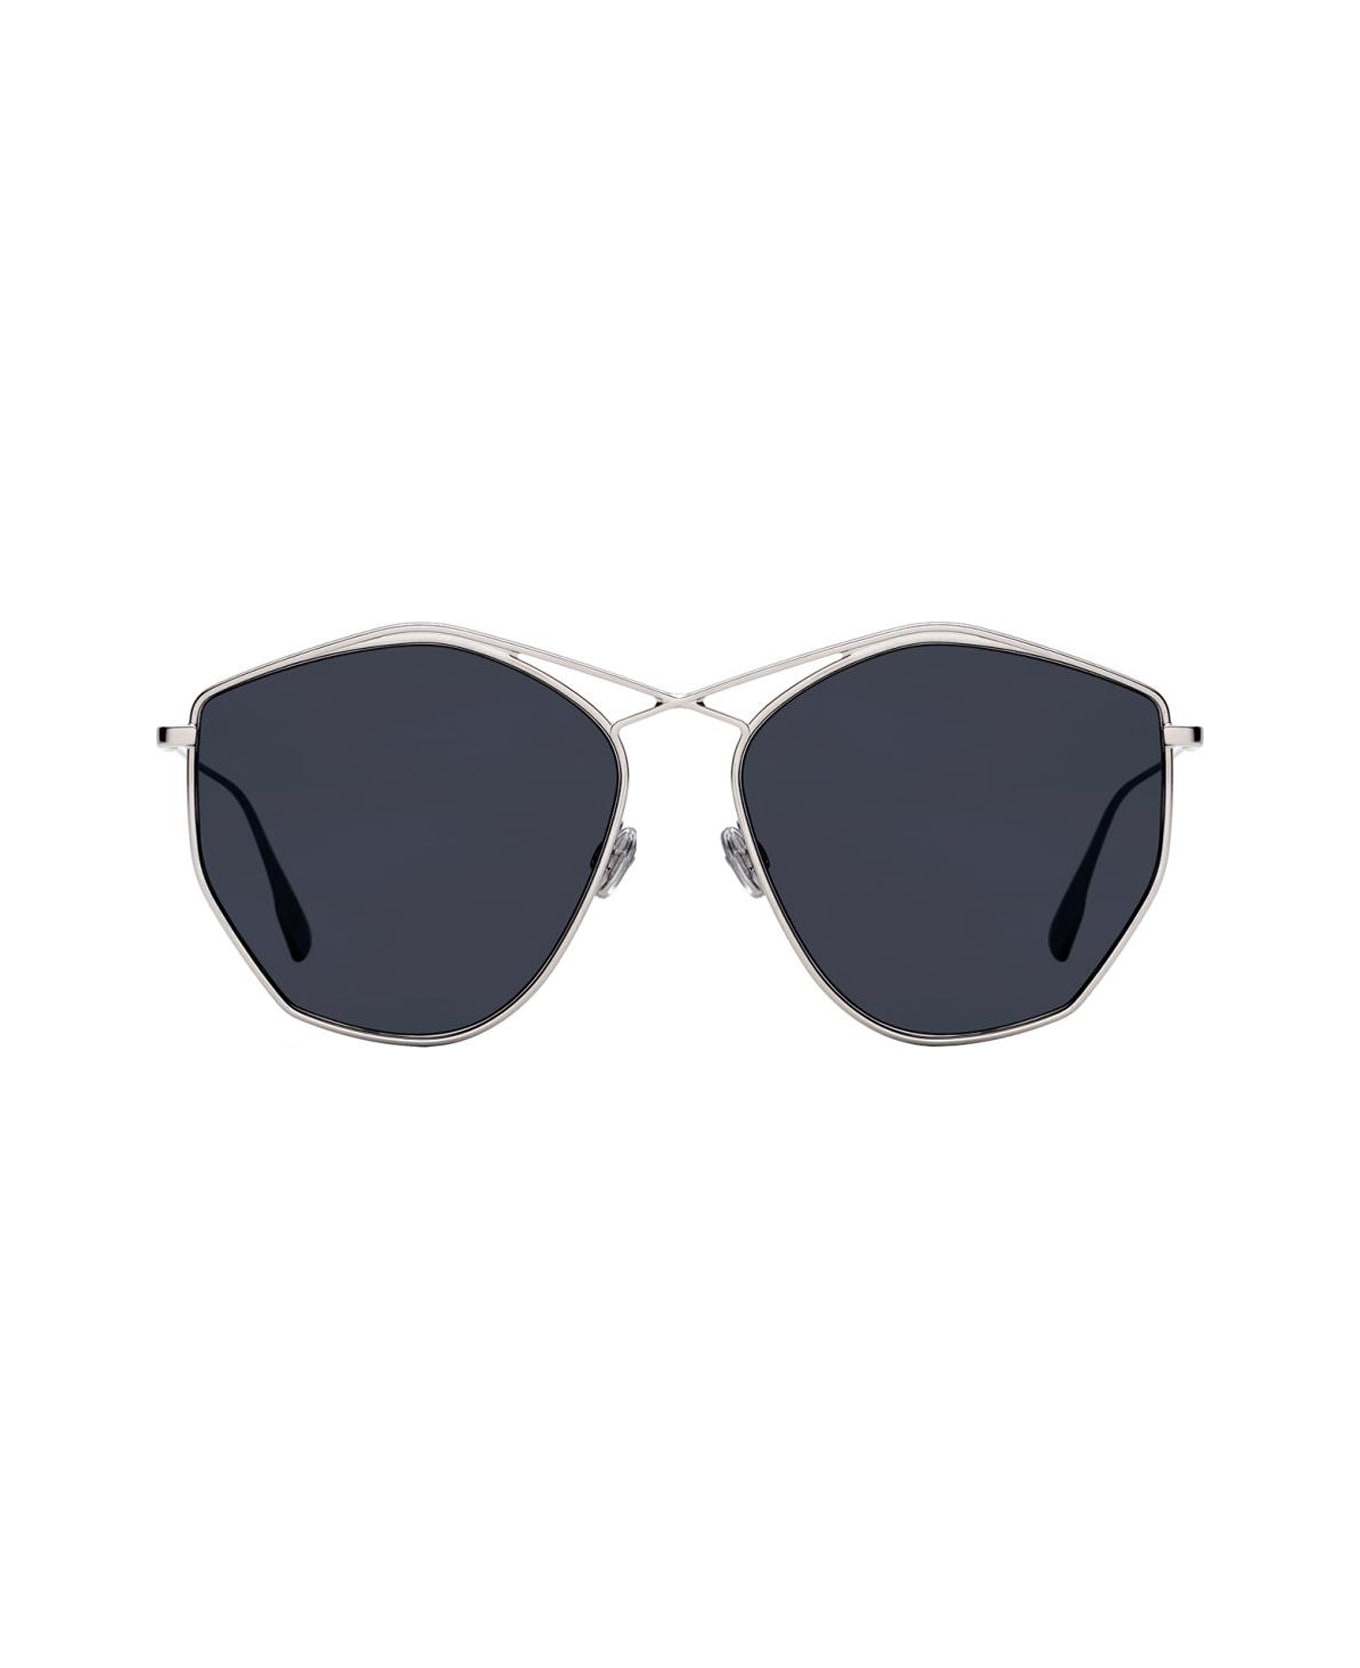 Dior Eyewear Stellaire 4 Sunglasses - Oro サングラス